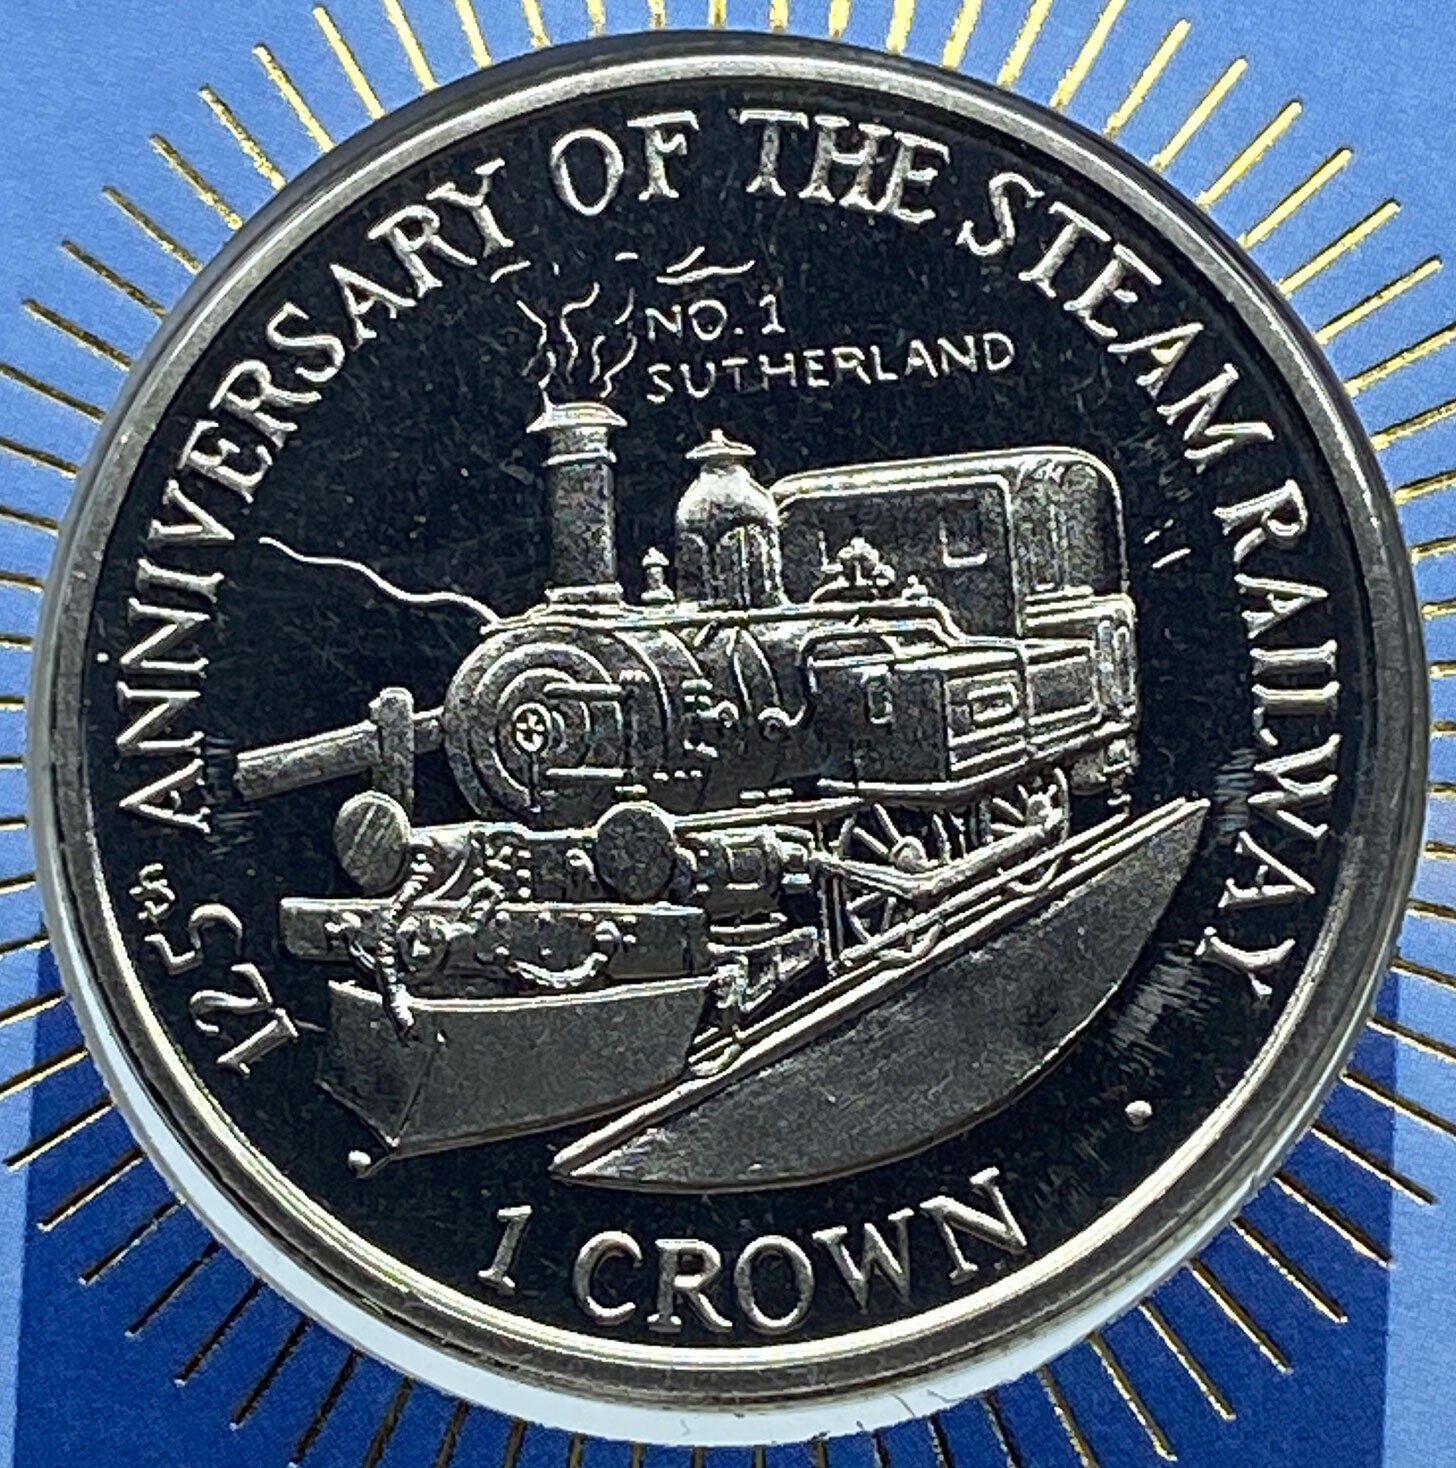 1998 ISLE OF MAN UK Steam Railway 125 Years Vintage Old Crown Coin i114448